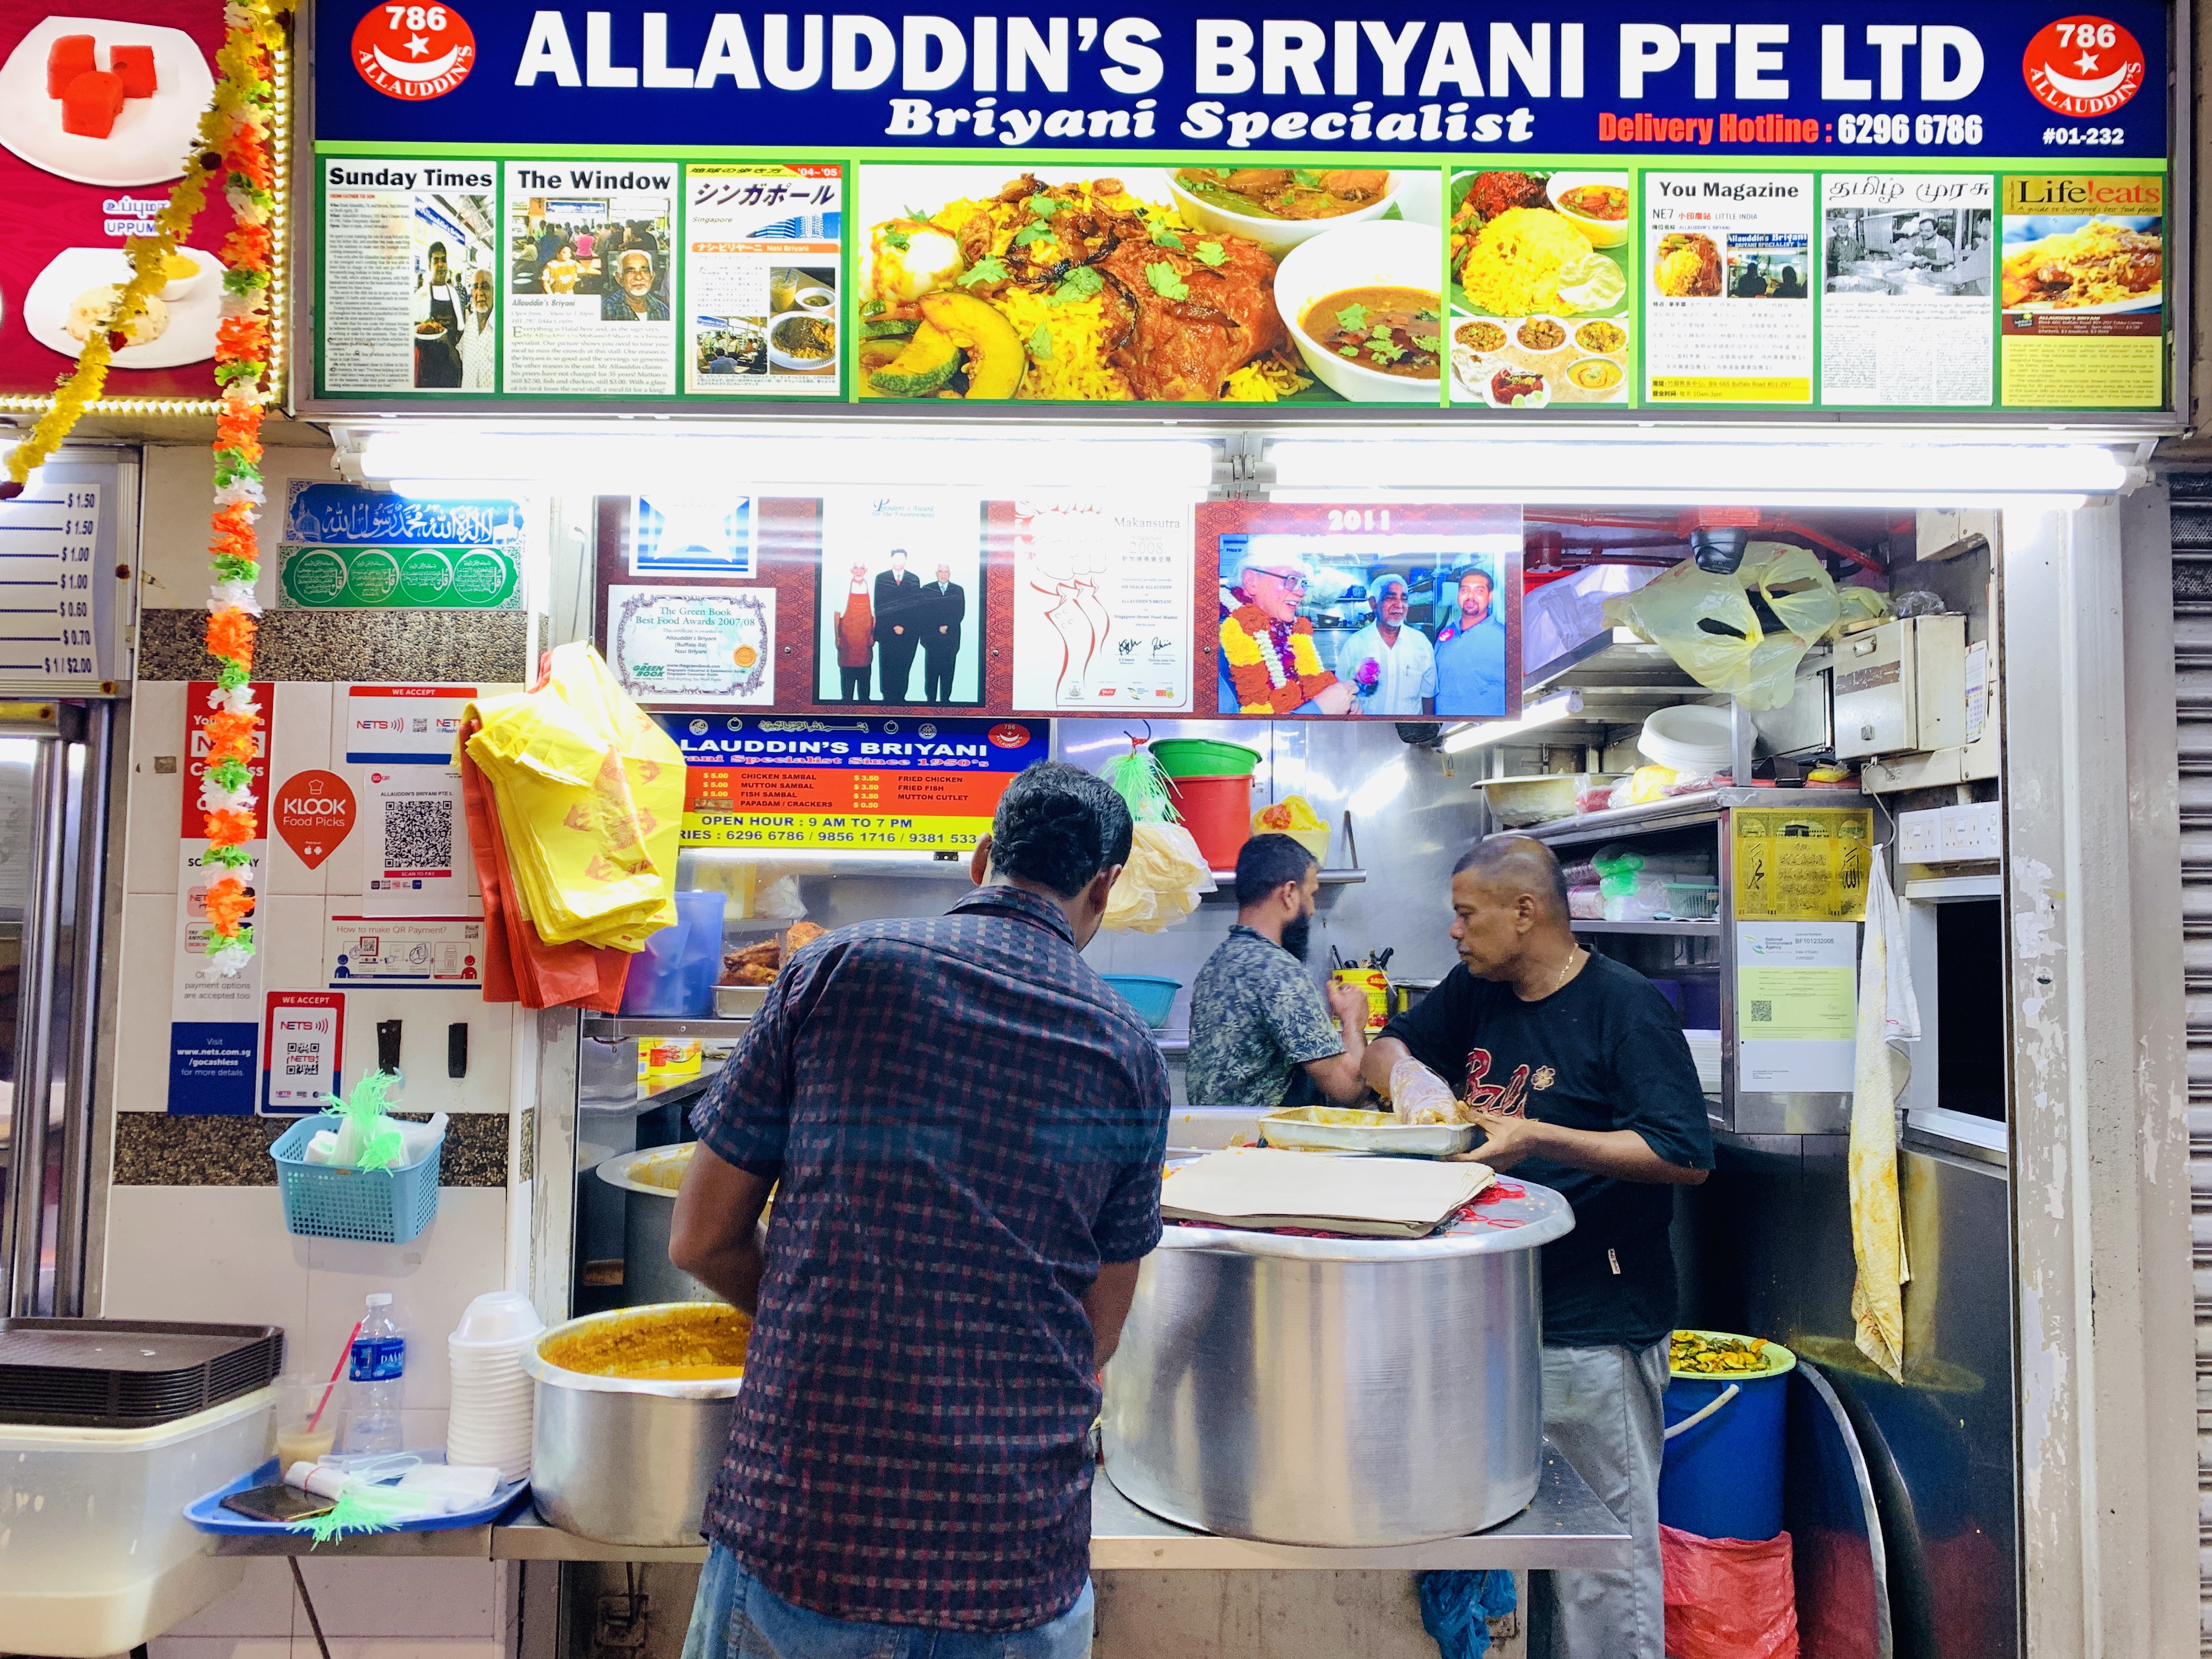 Allauddin's Biryani Pte Ltd - Briyani Specialist Close